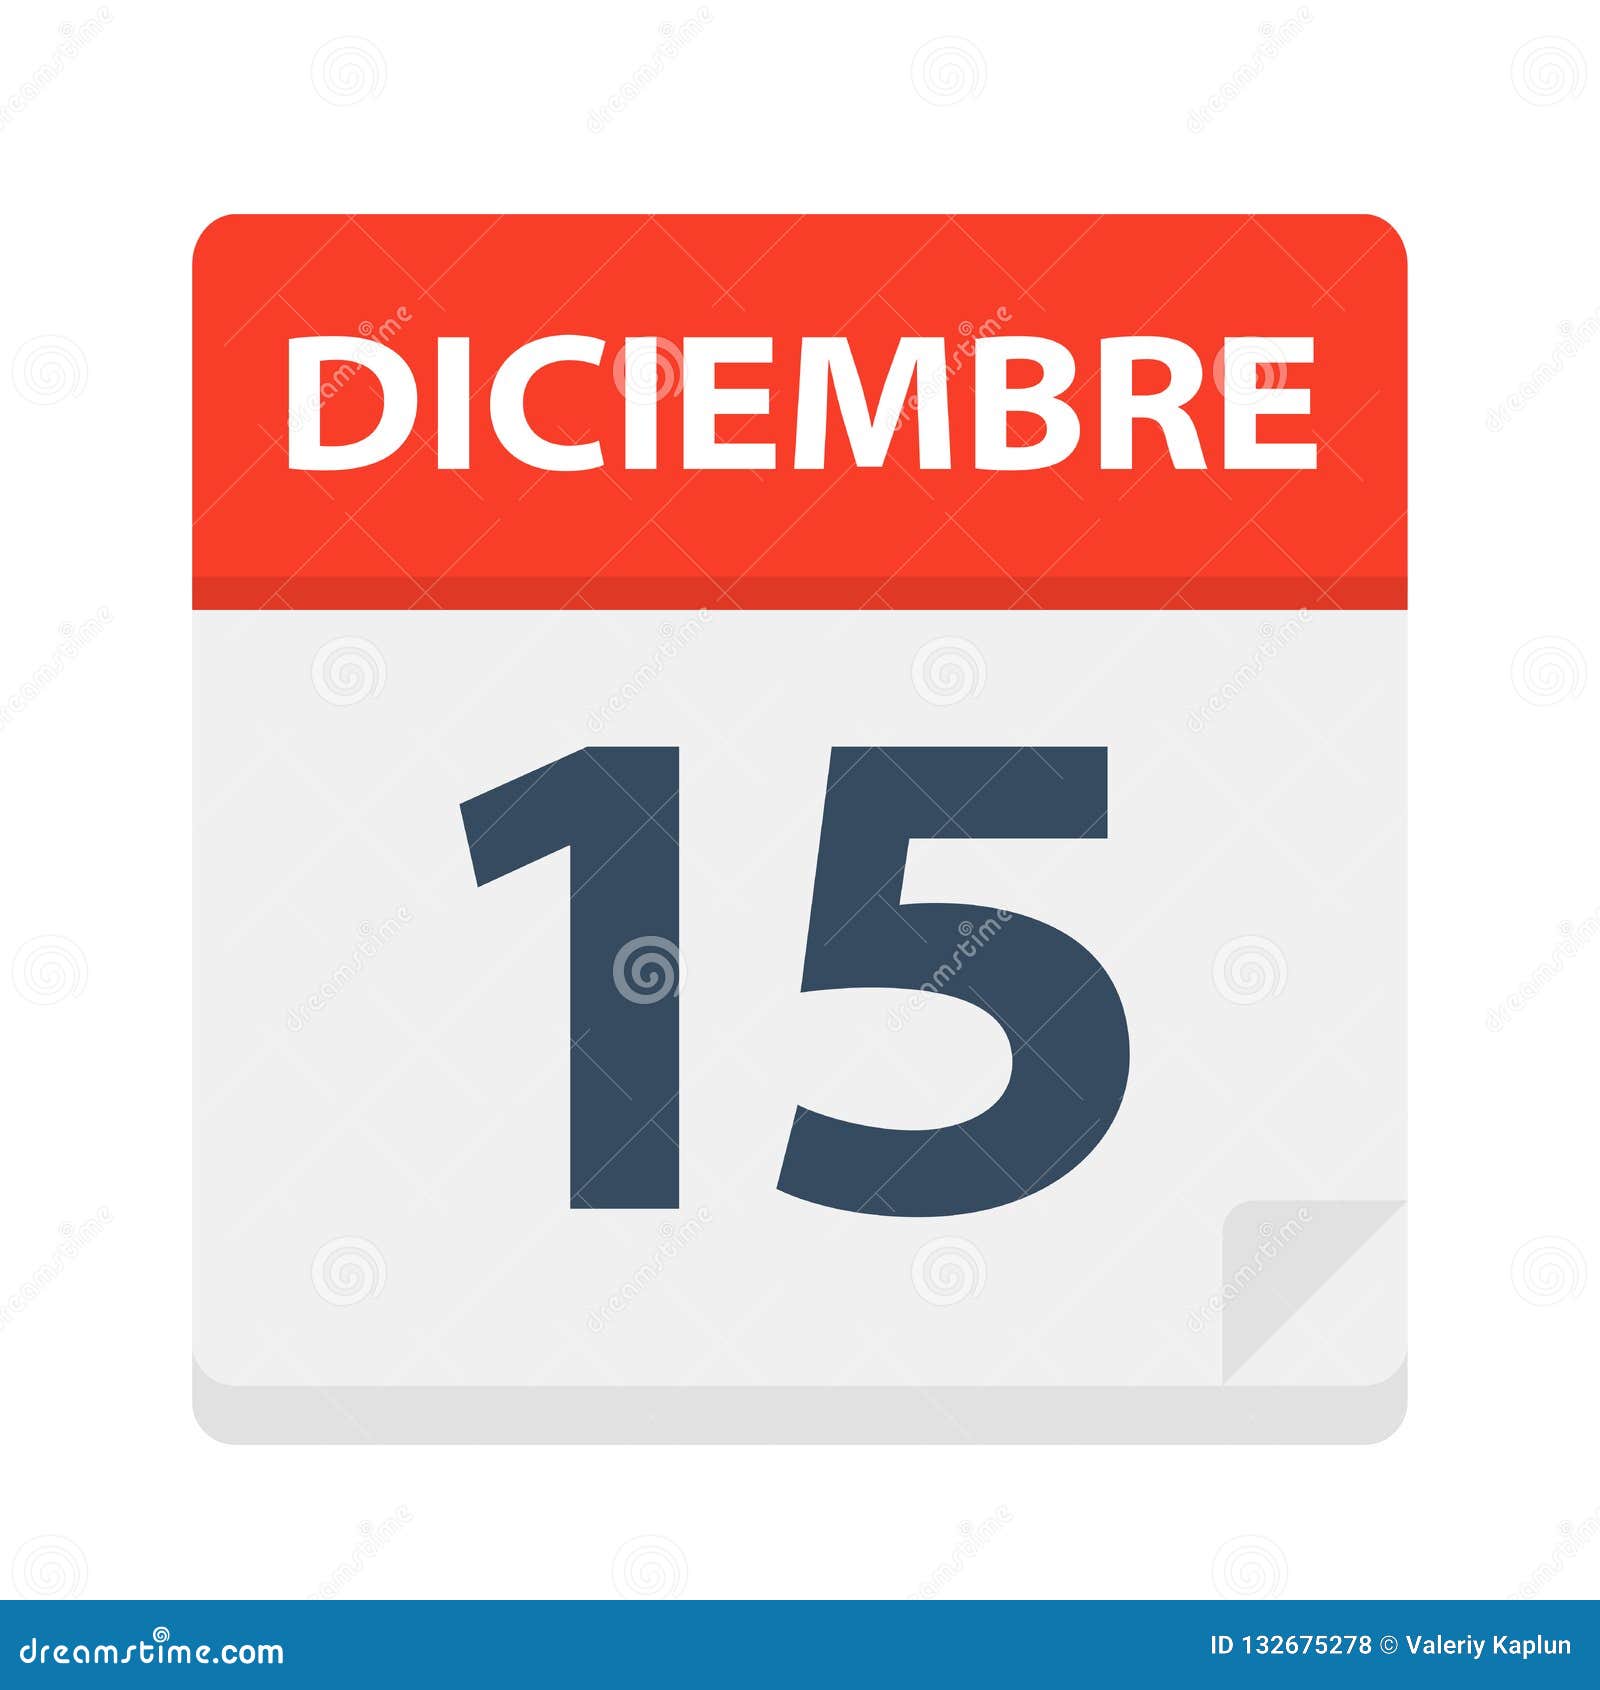 diciembre 15 - calendar icon - december 15.   of spanish calendar leaf